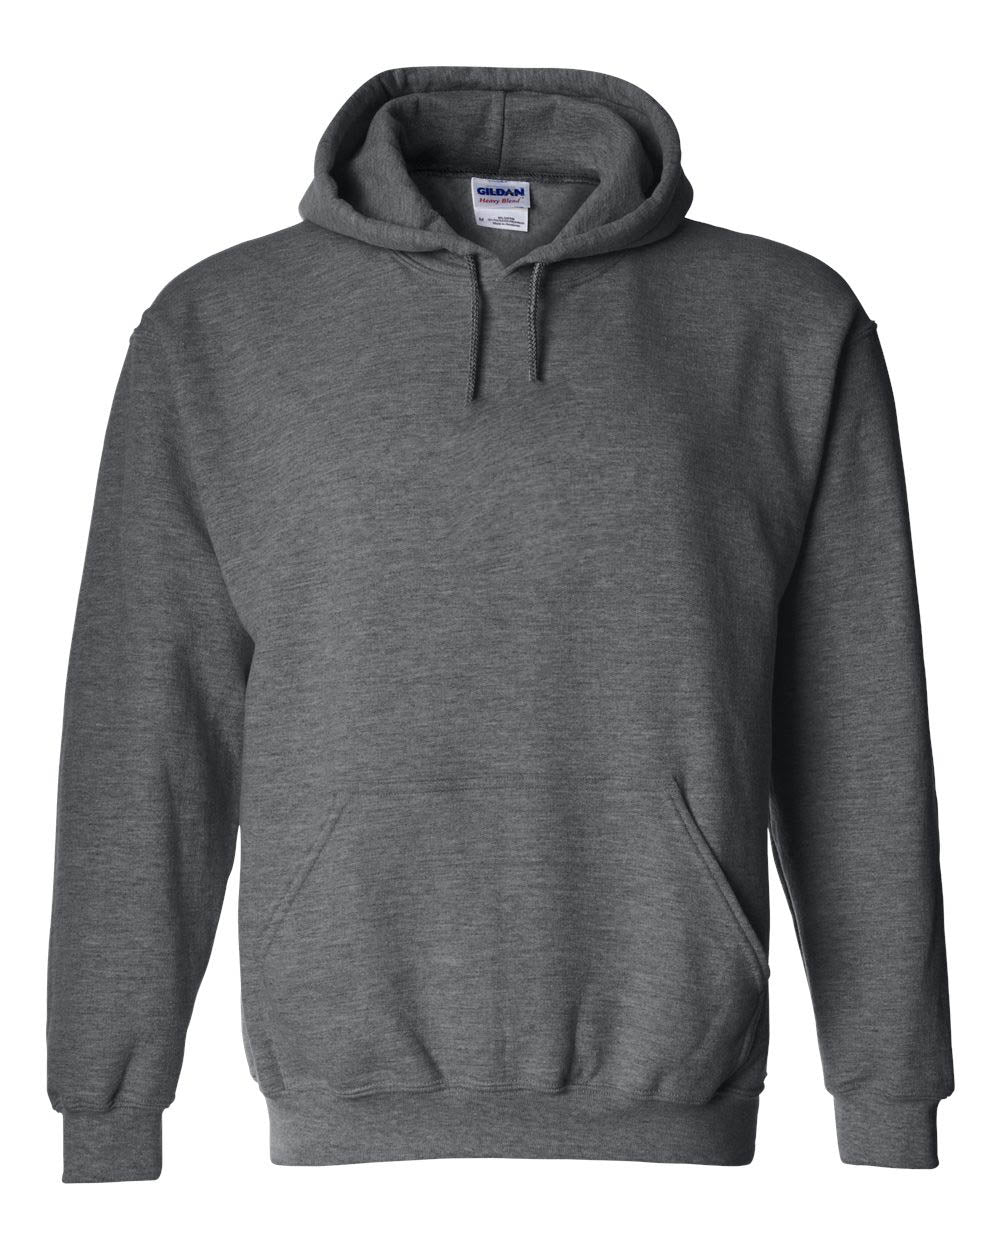 Titan Elite Design 4 Hooded Sweatshirt